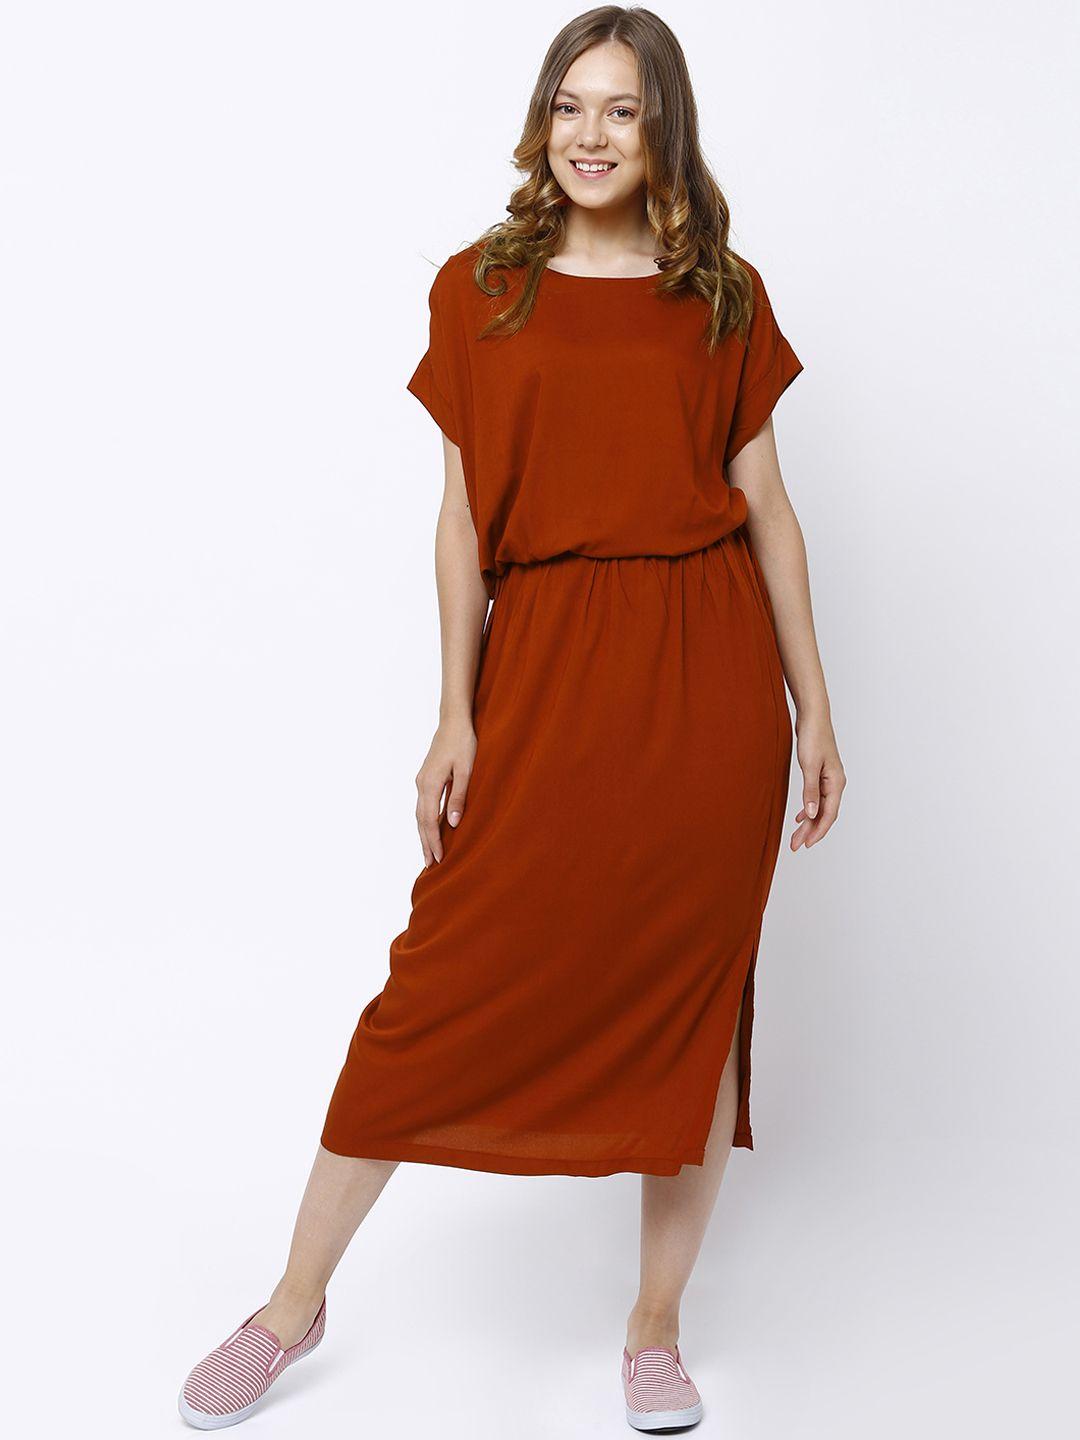 tokyo-talkies-women-rust-red-solid-blouson-dress